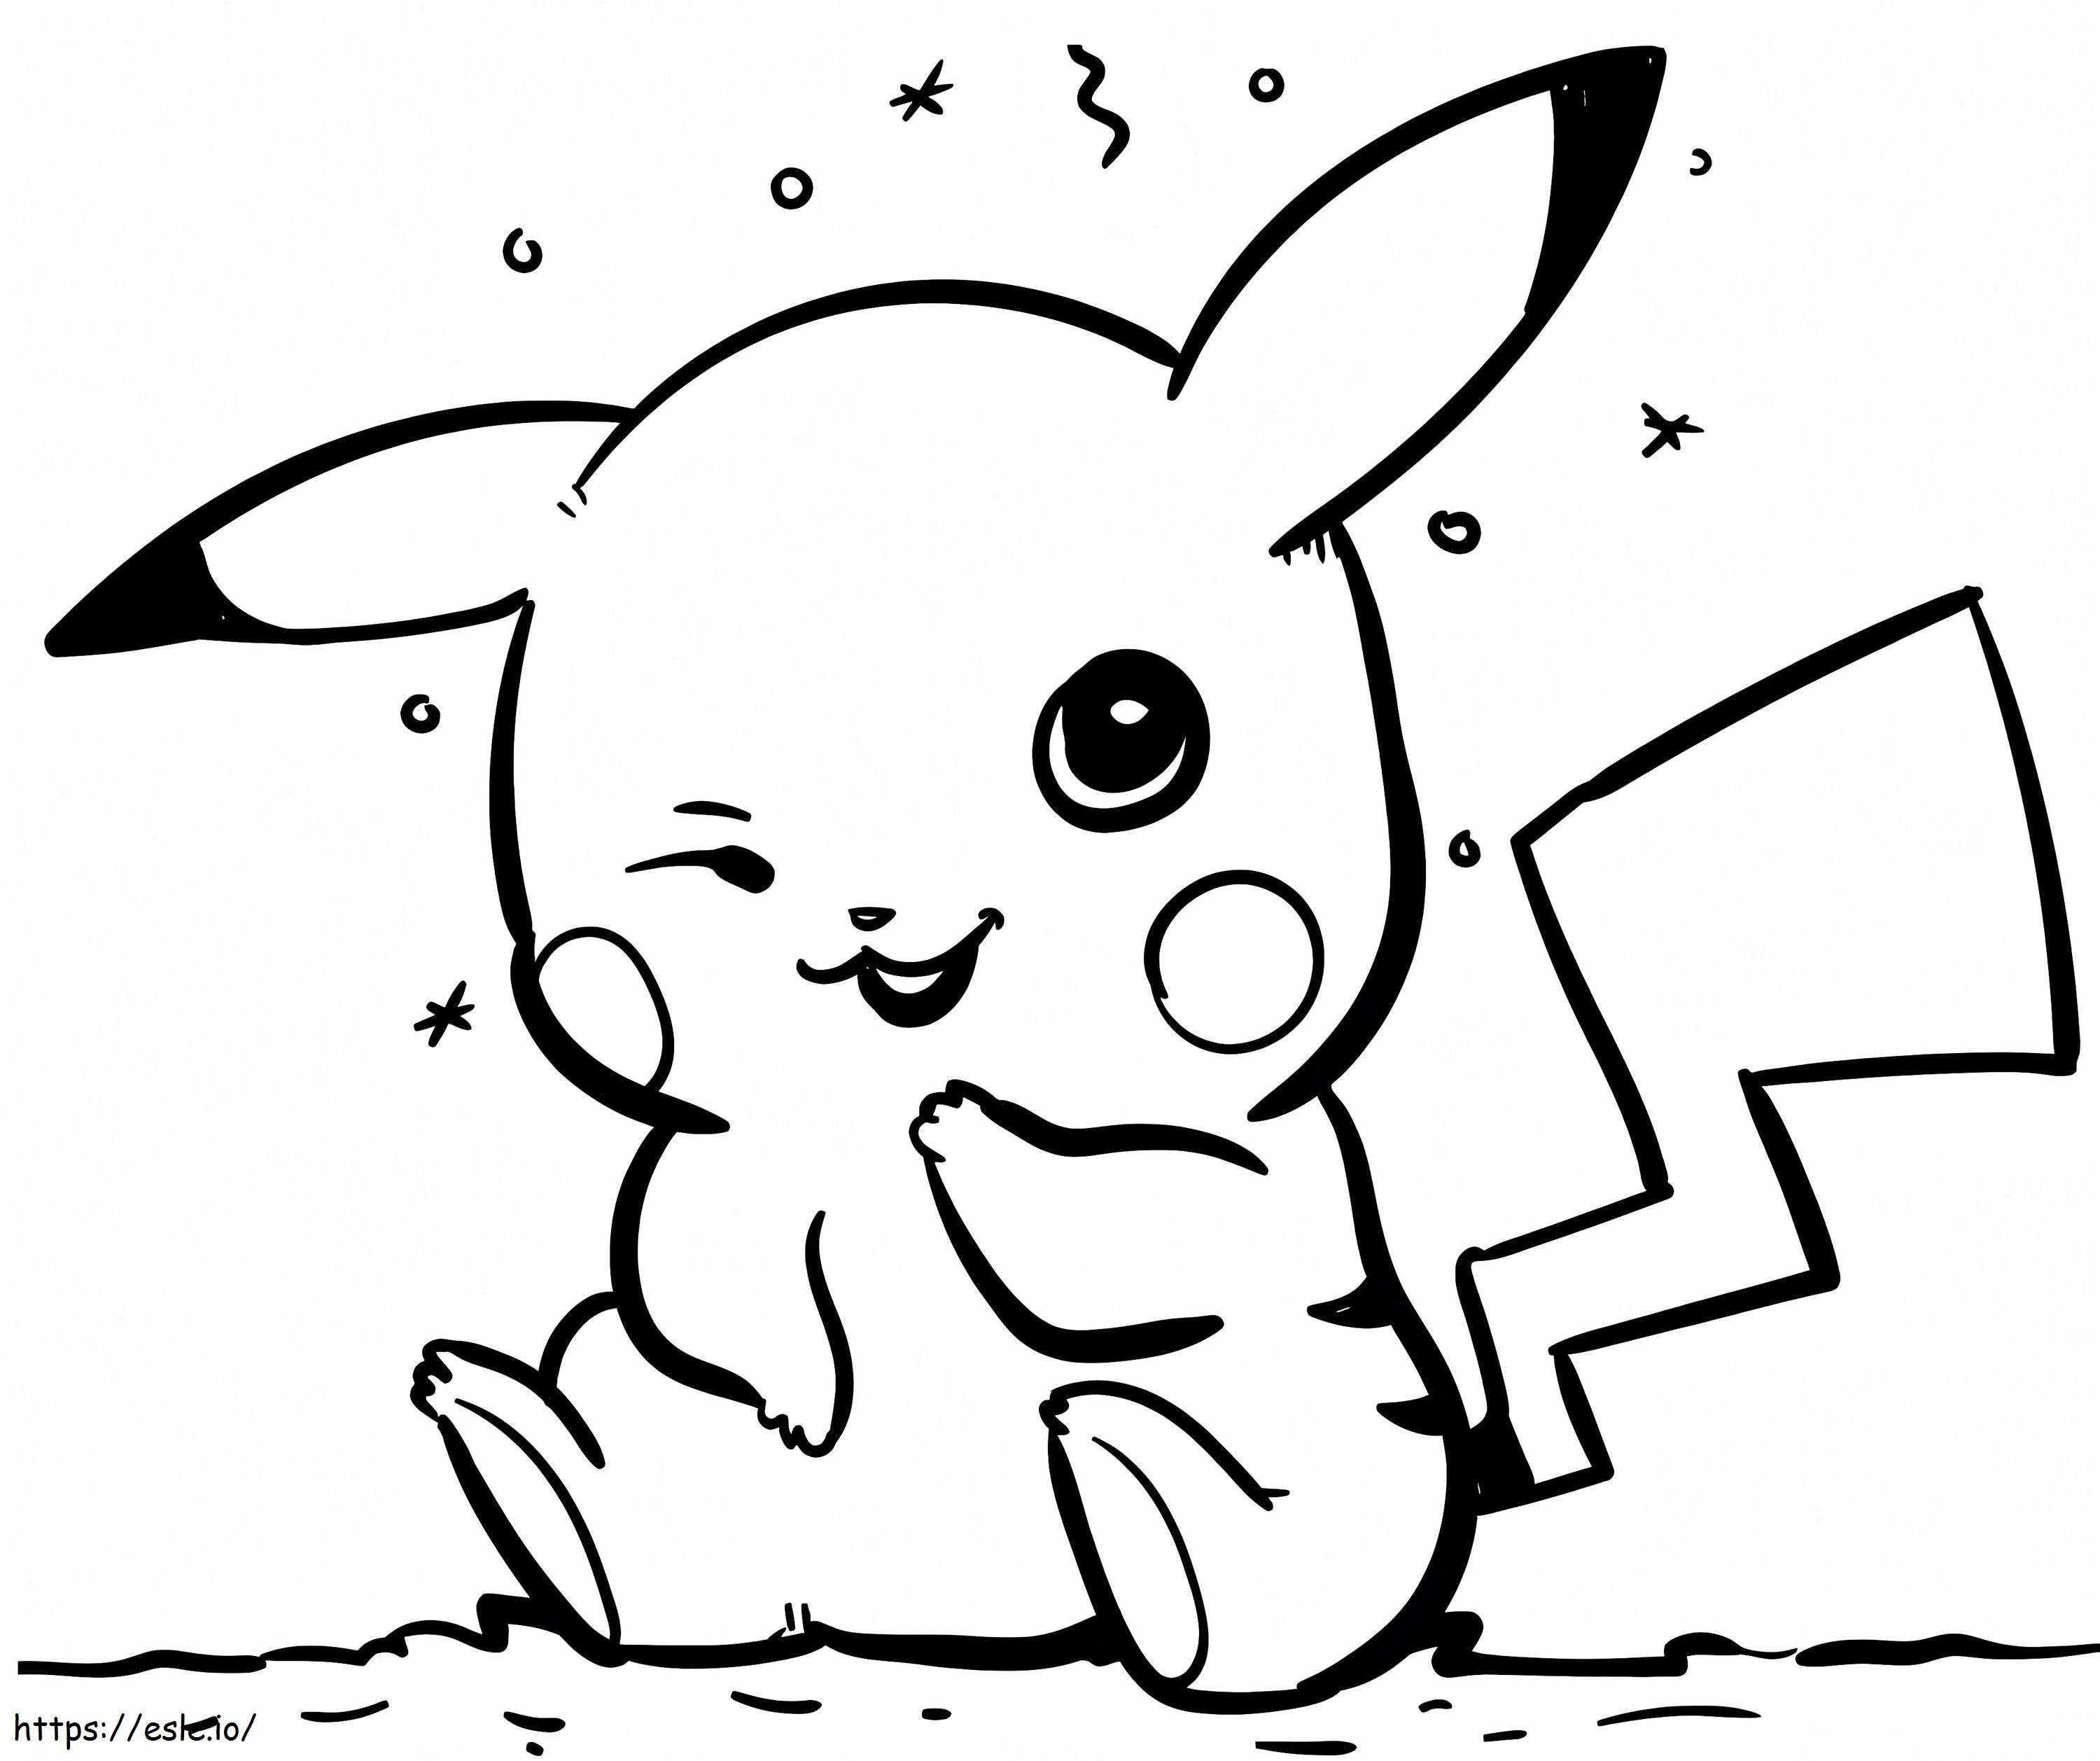 Coloriage Pikachu qui rit à imprimer dessin